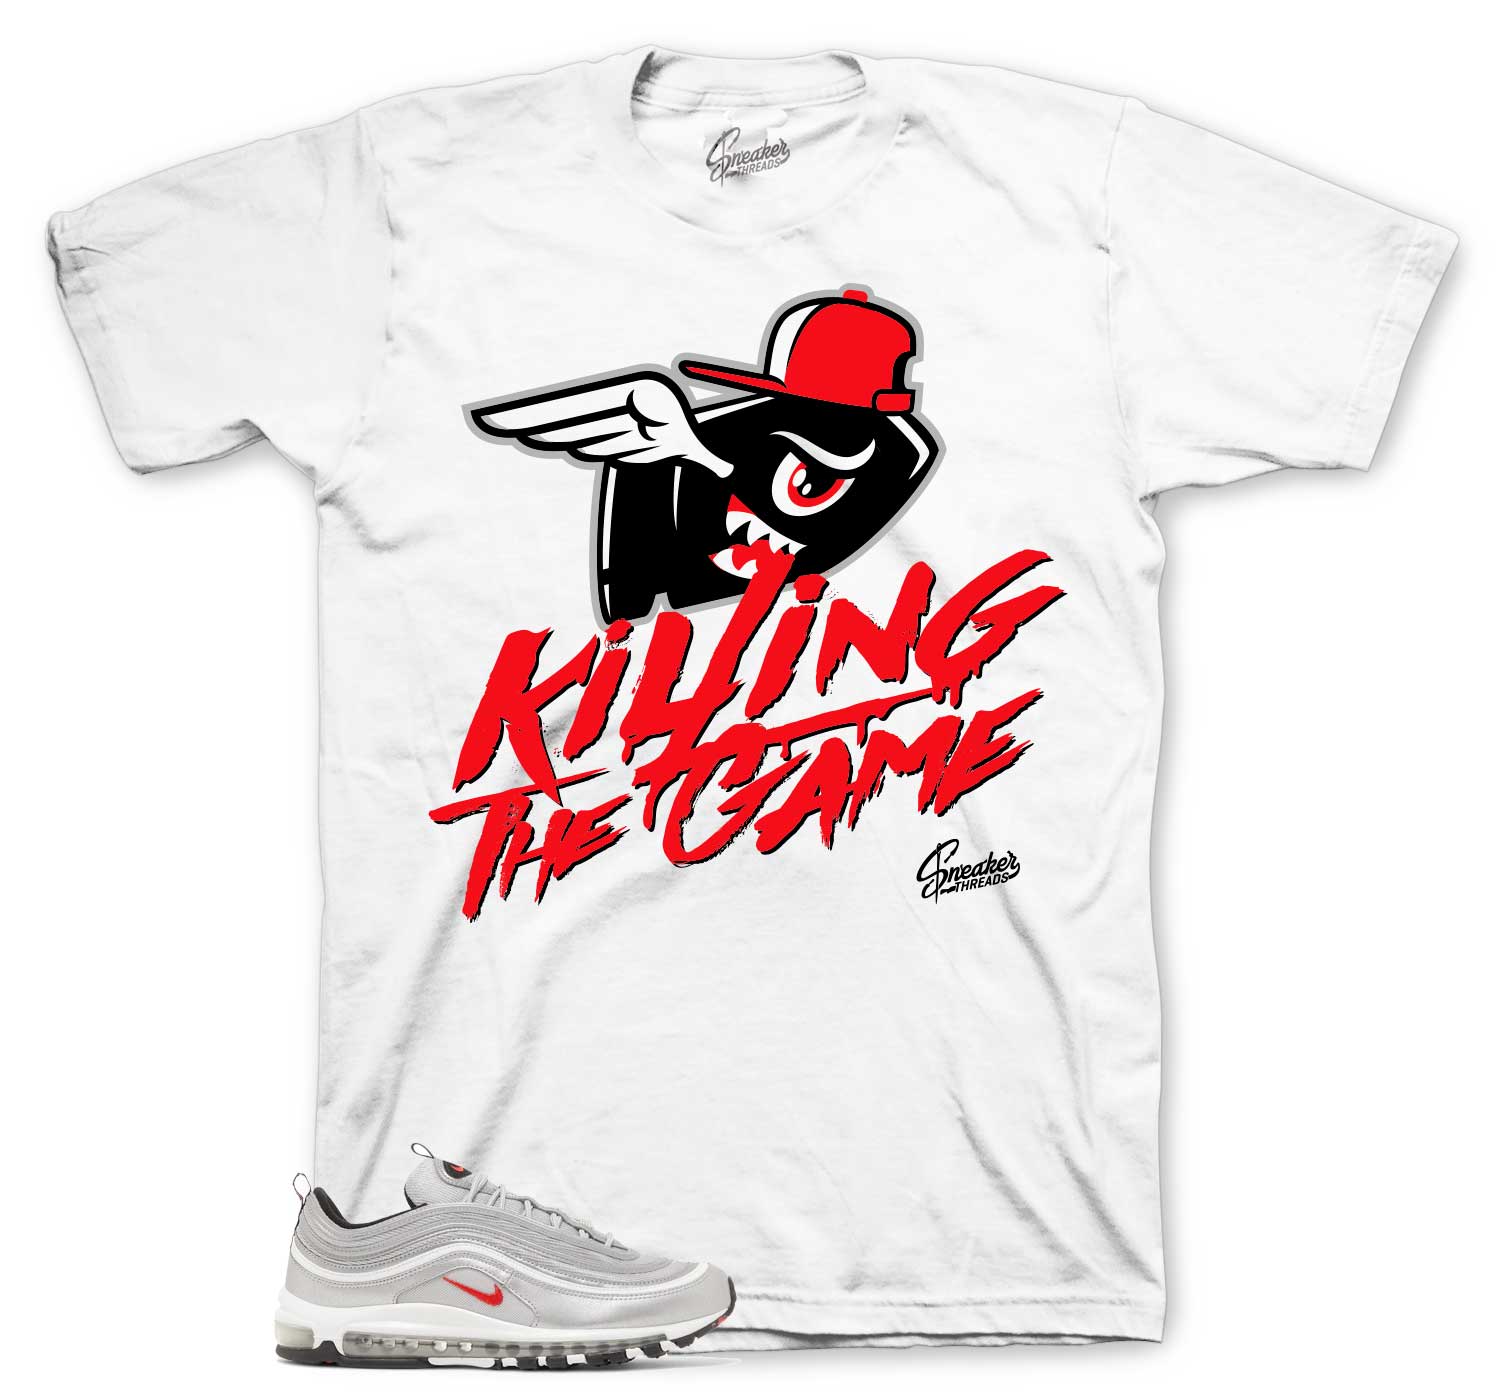 Air Max 97 Silver Bullet Shirt - Killing the Game - White